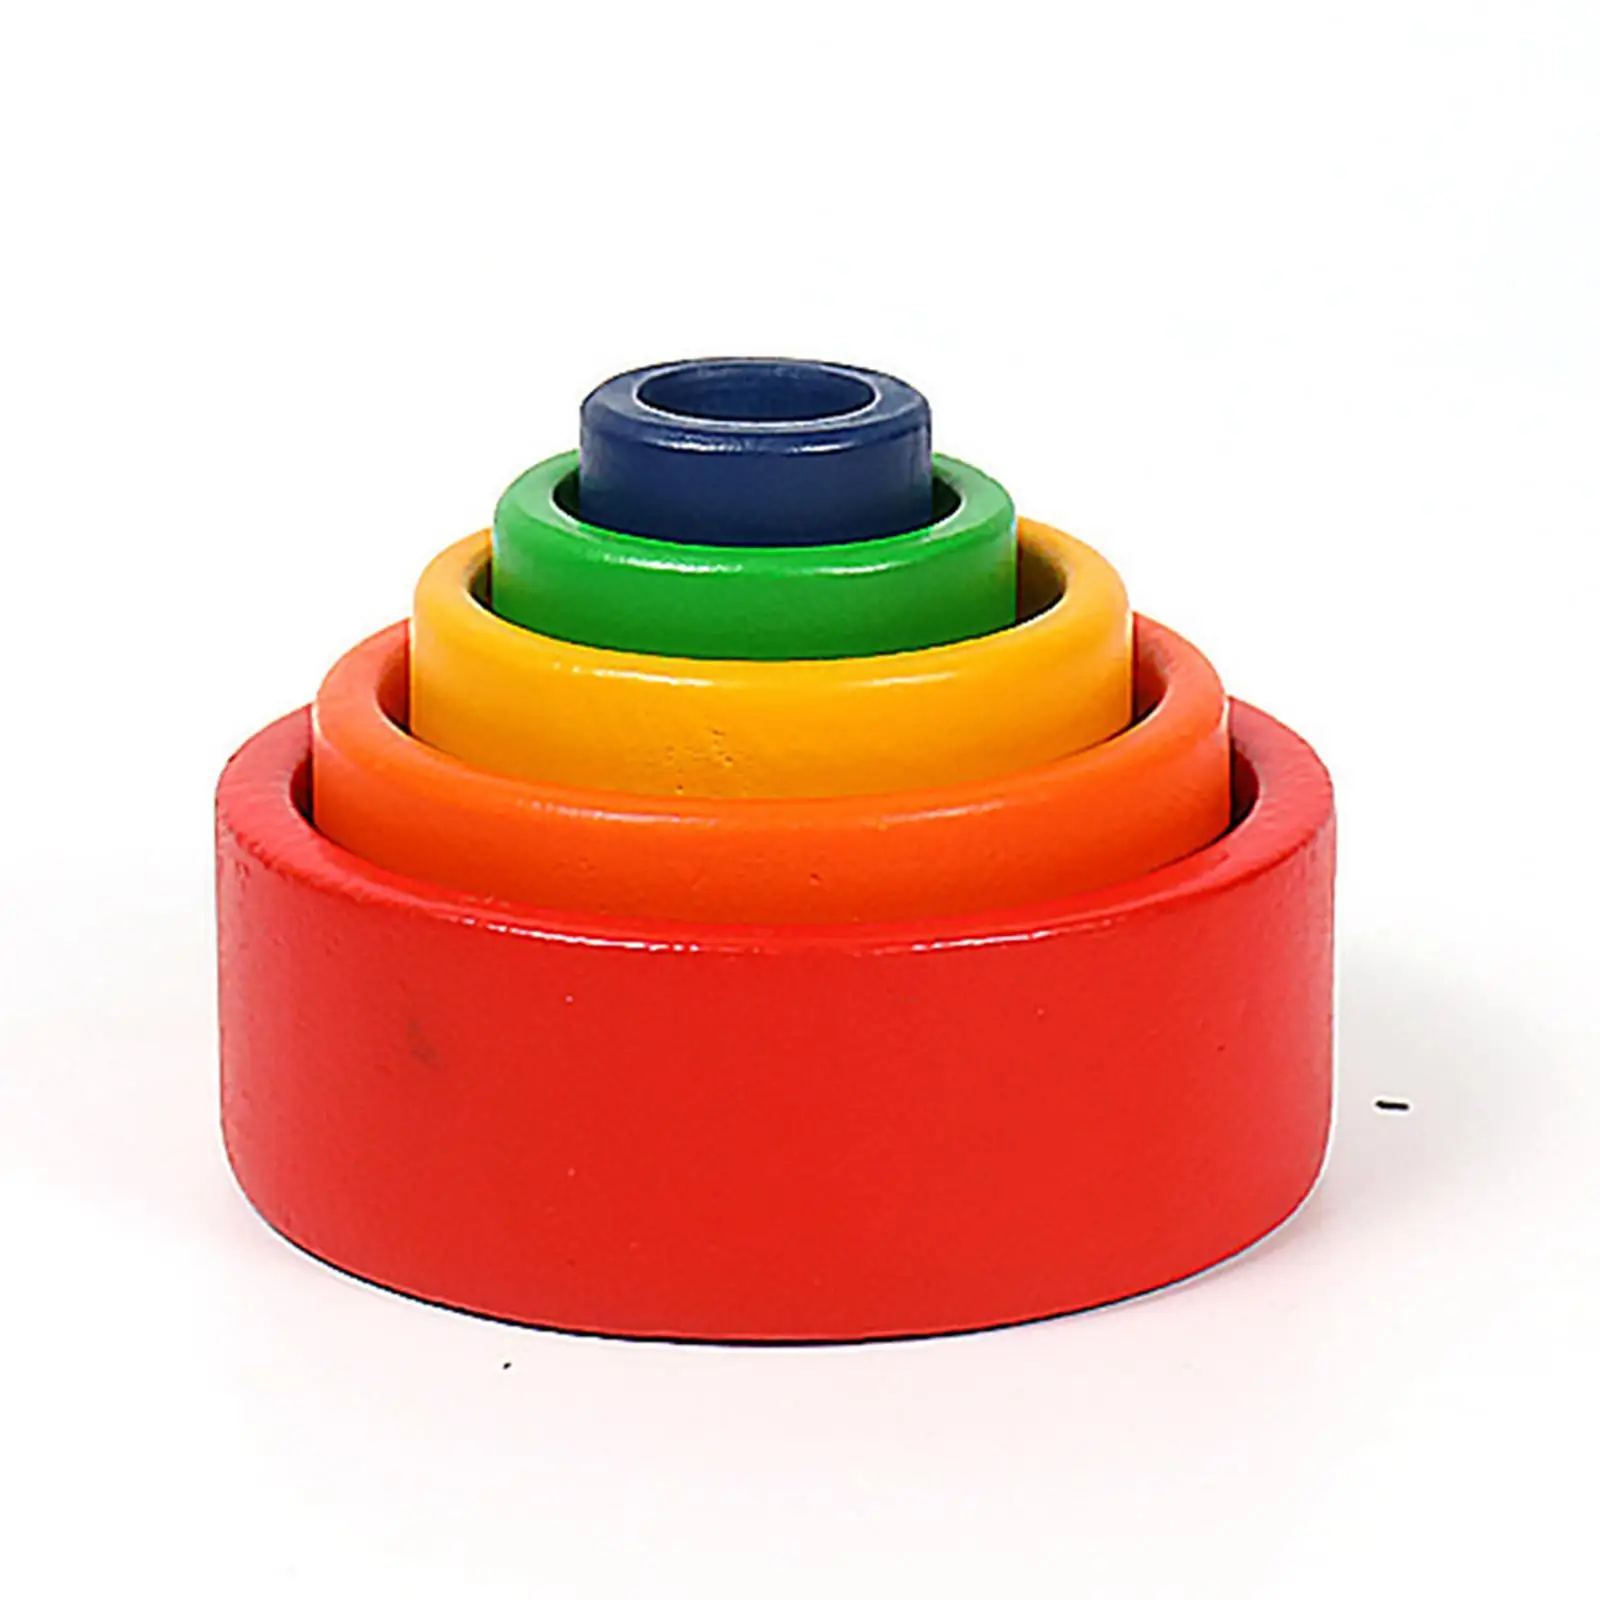 5x Creative Wooden Rainbow Stacker Montessori Toys Rainbow Bowl for Enhancing Thinking Logic Early Development Gift Girls Boys